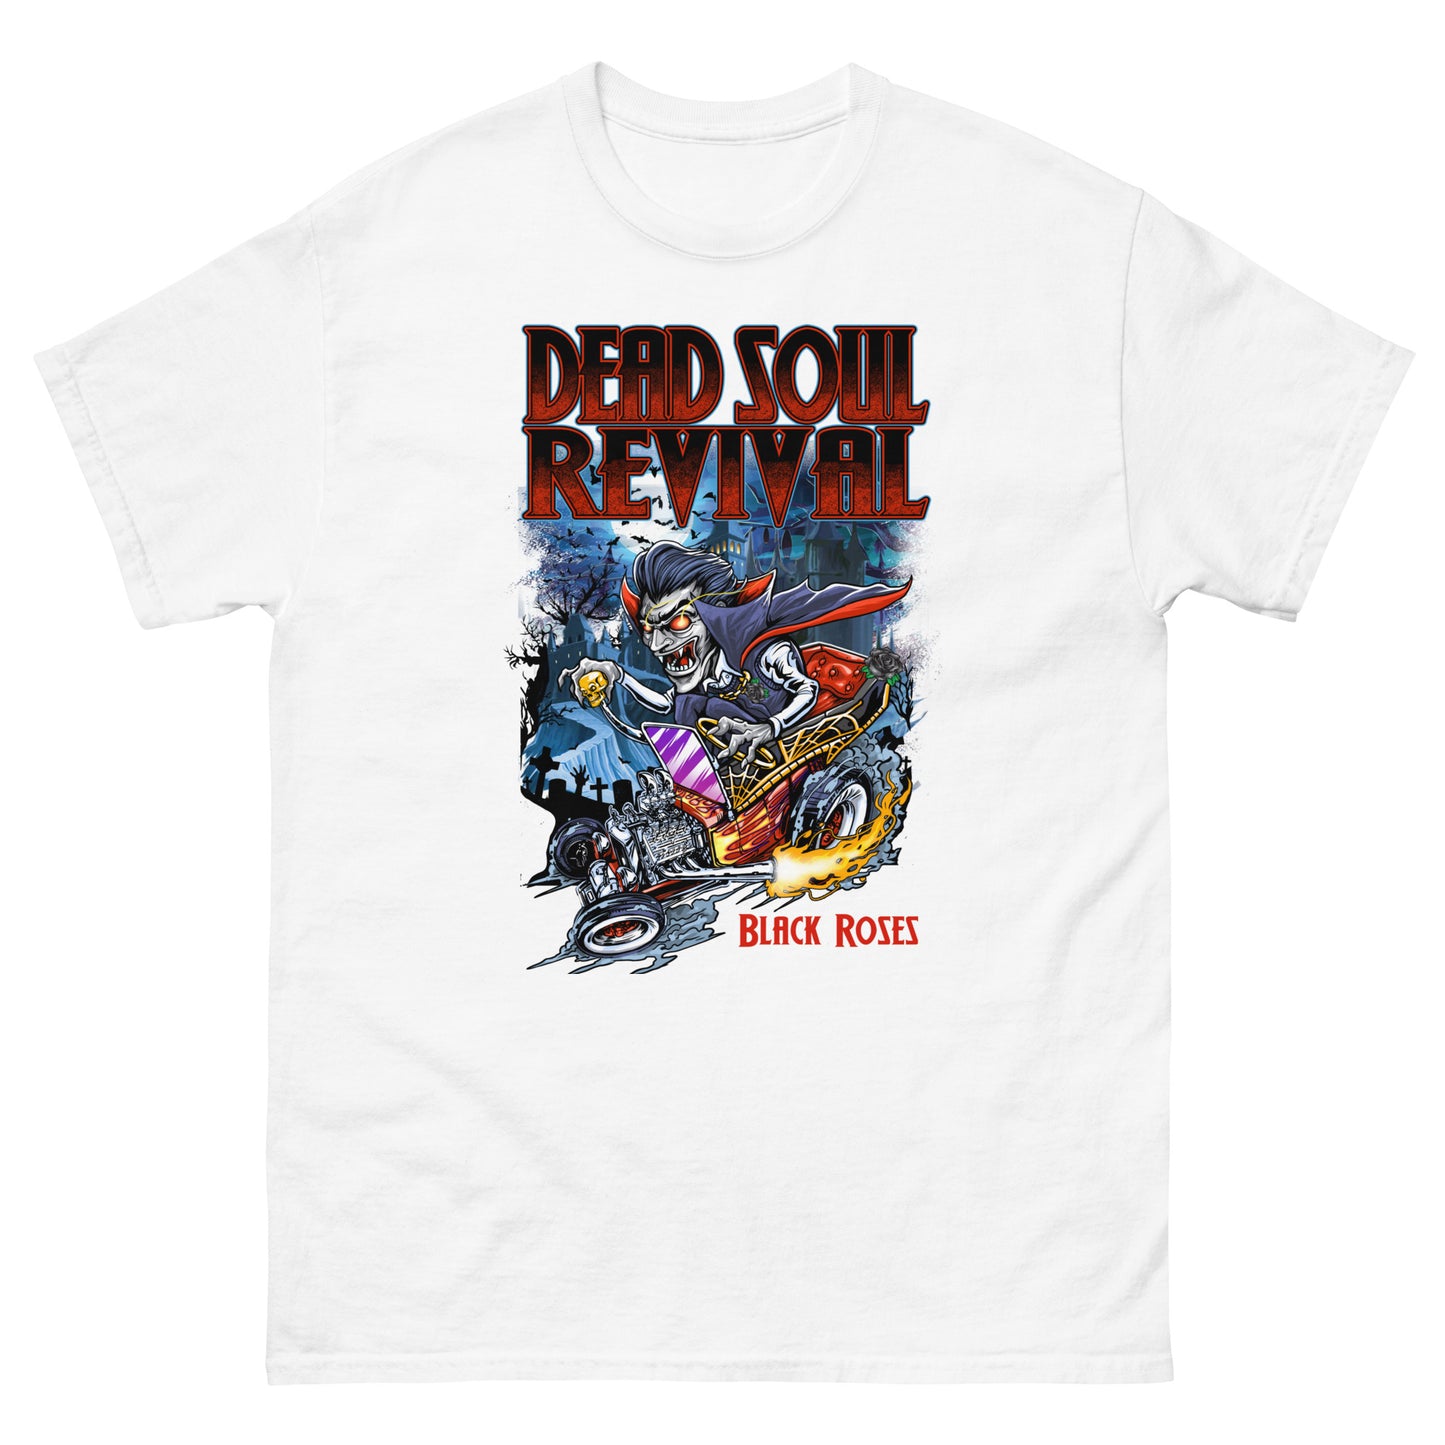 "Dracula's Revenge" T-Shirt -  Black Roses series #2